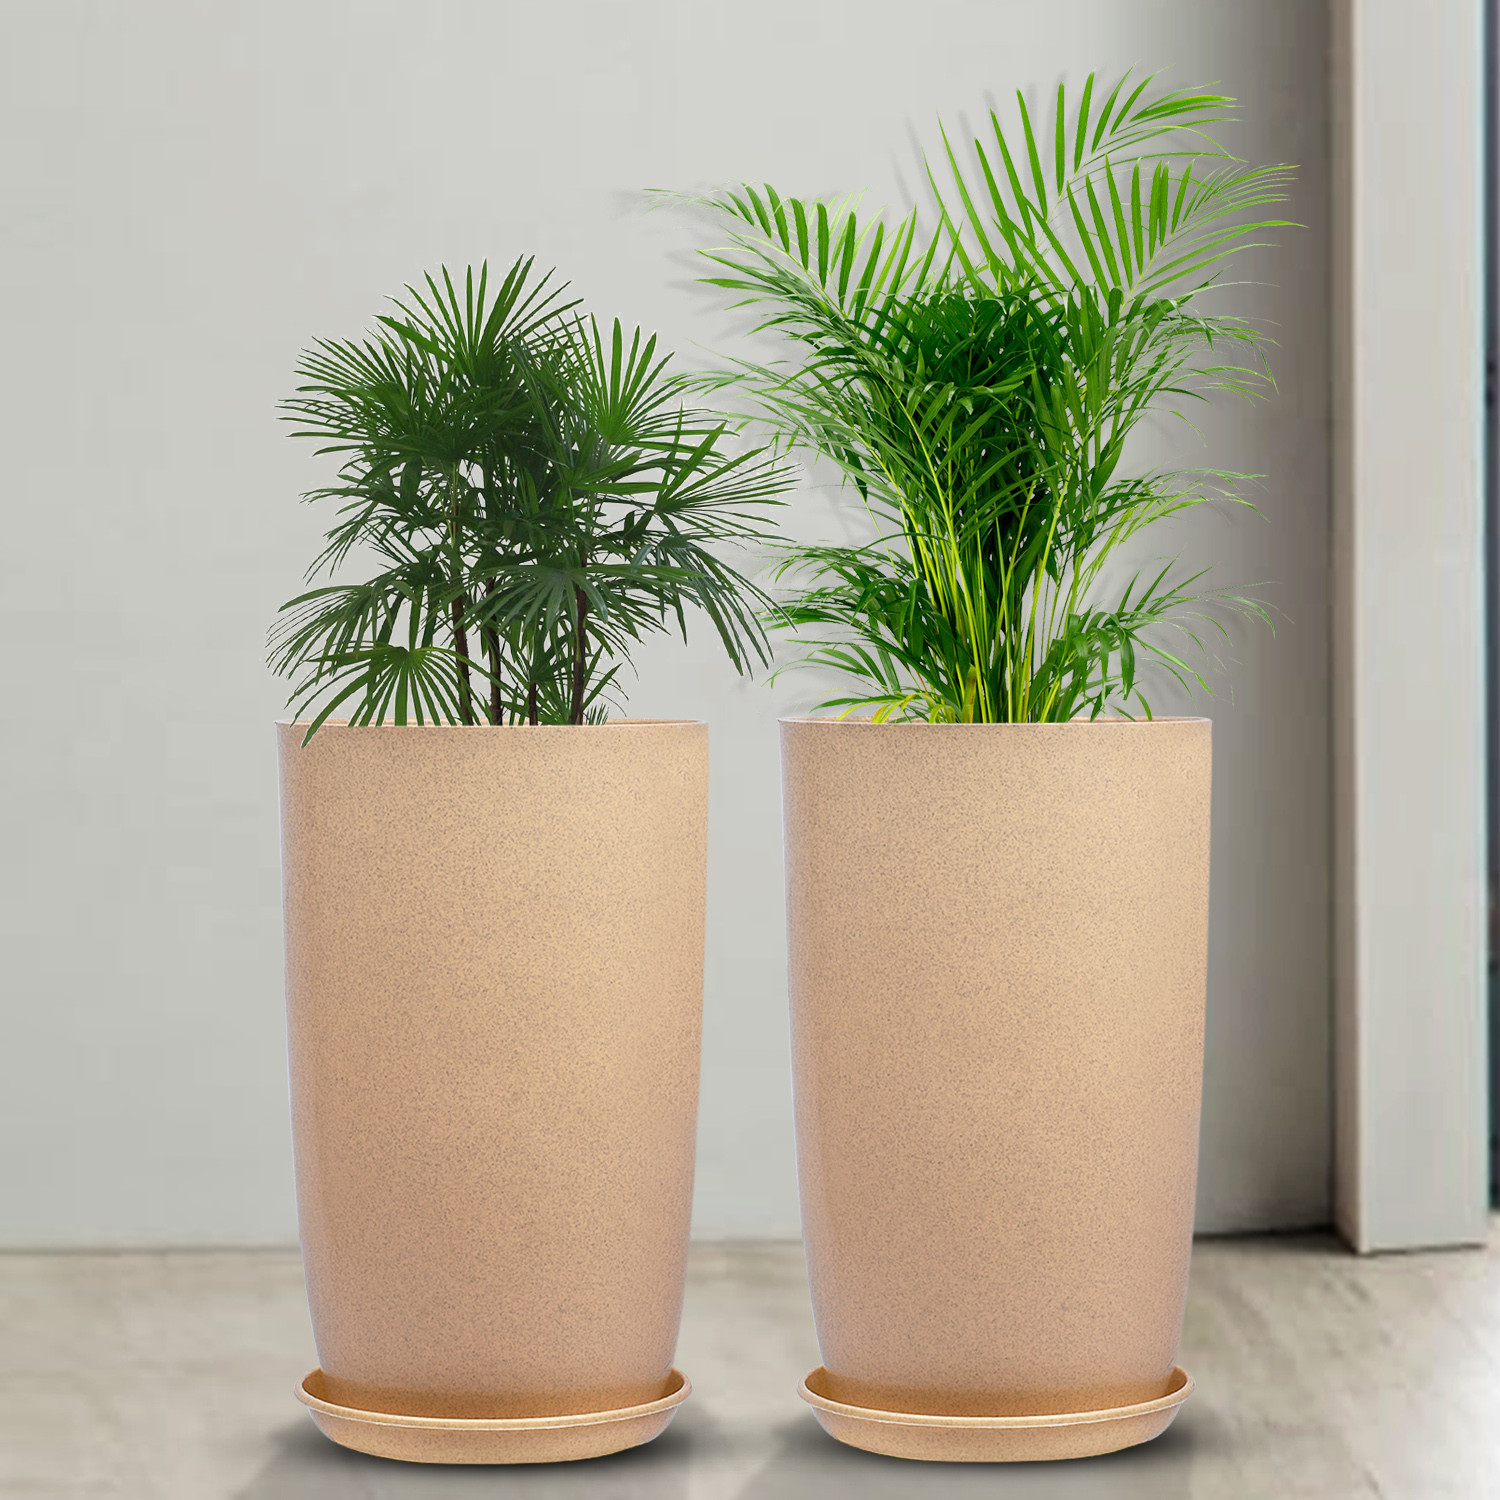 Kuber Industries Flower Pot with Plate | 18 Inch Lightweight Polymers Indoor-Outdoor Plant Pots | Flower Pot Gamla for Home-Office & Garden | Planter for Living Room | Beige